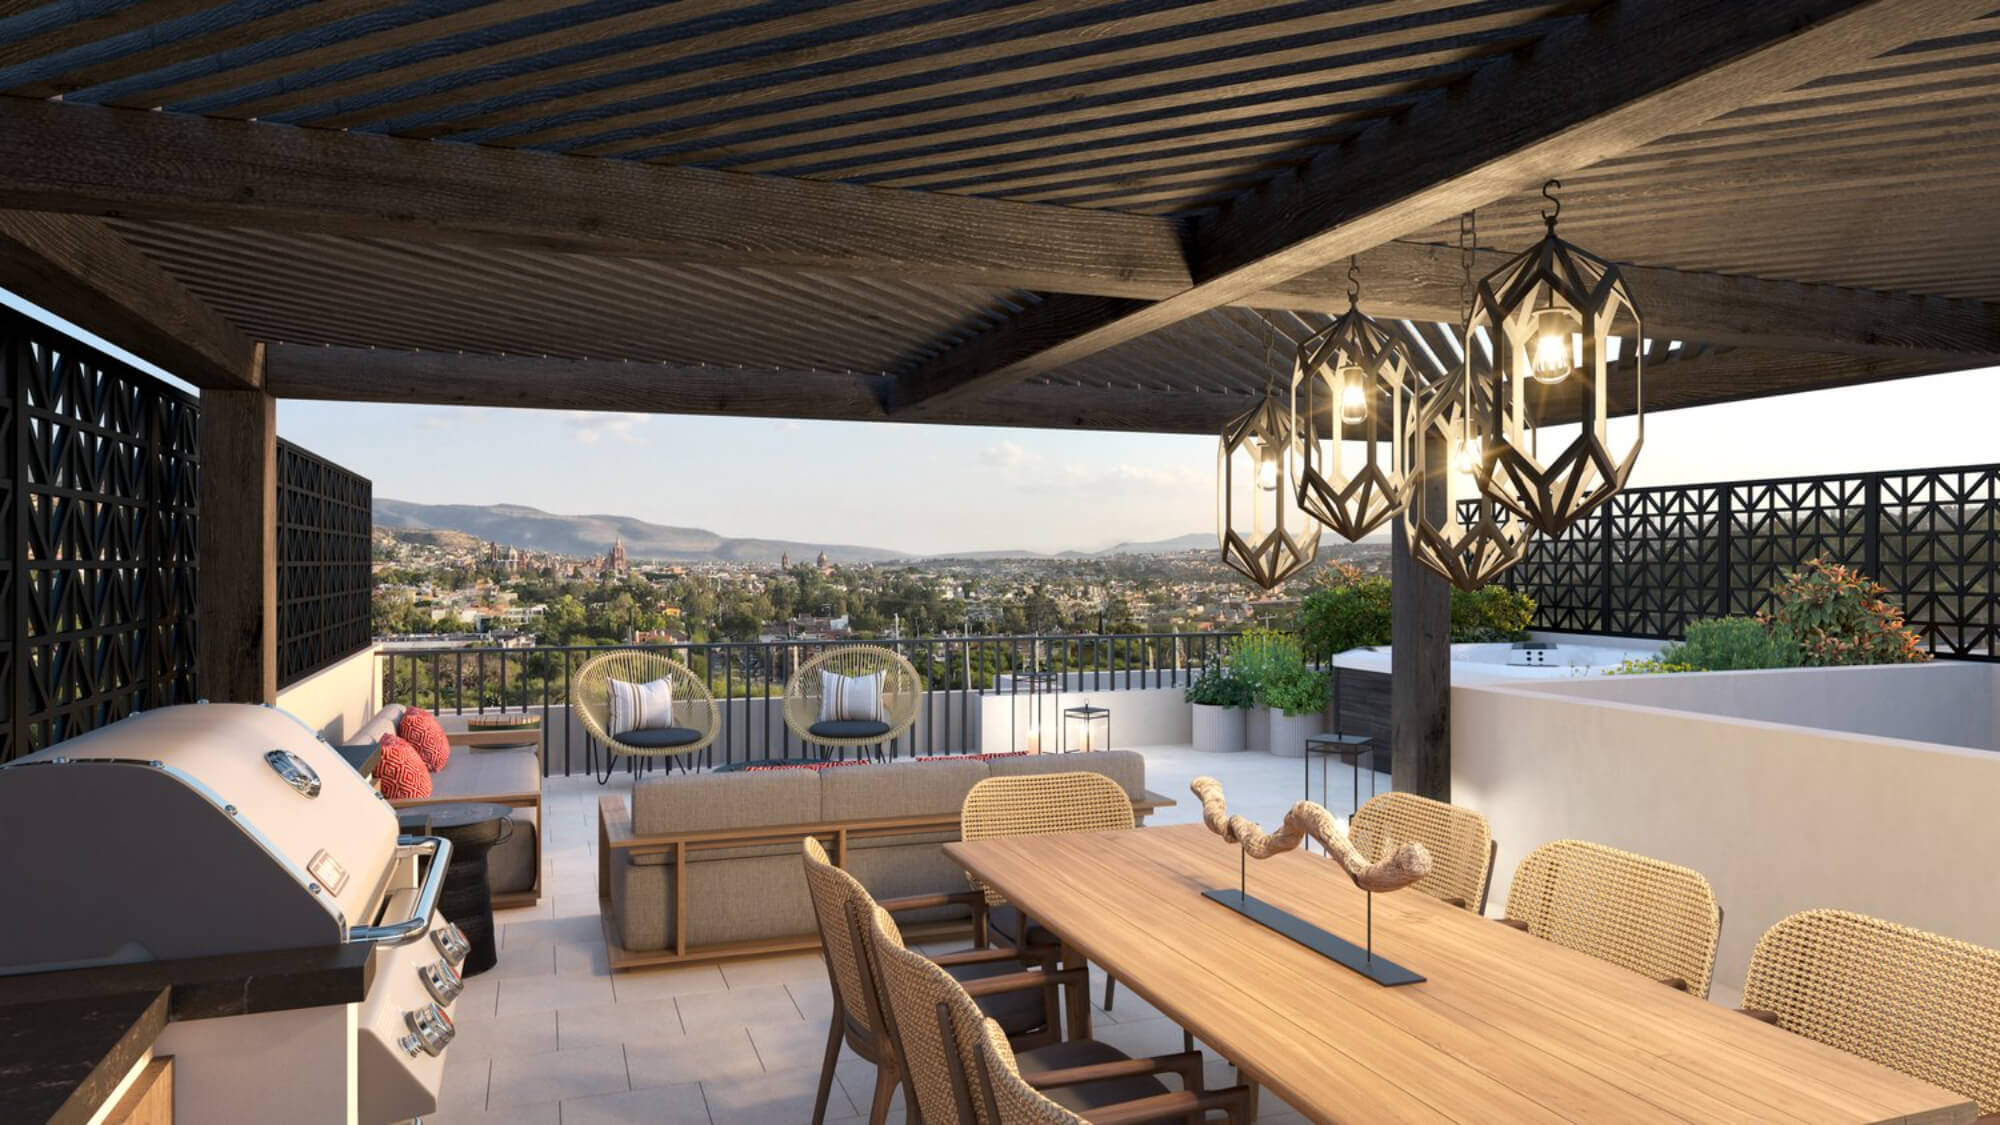 Luxury penthouse, private rooftop, jacuzzi, gym, for sale San Miguel de Allende.